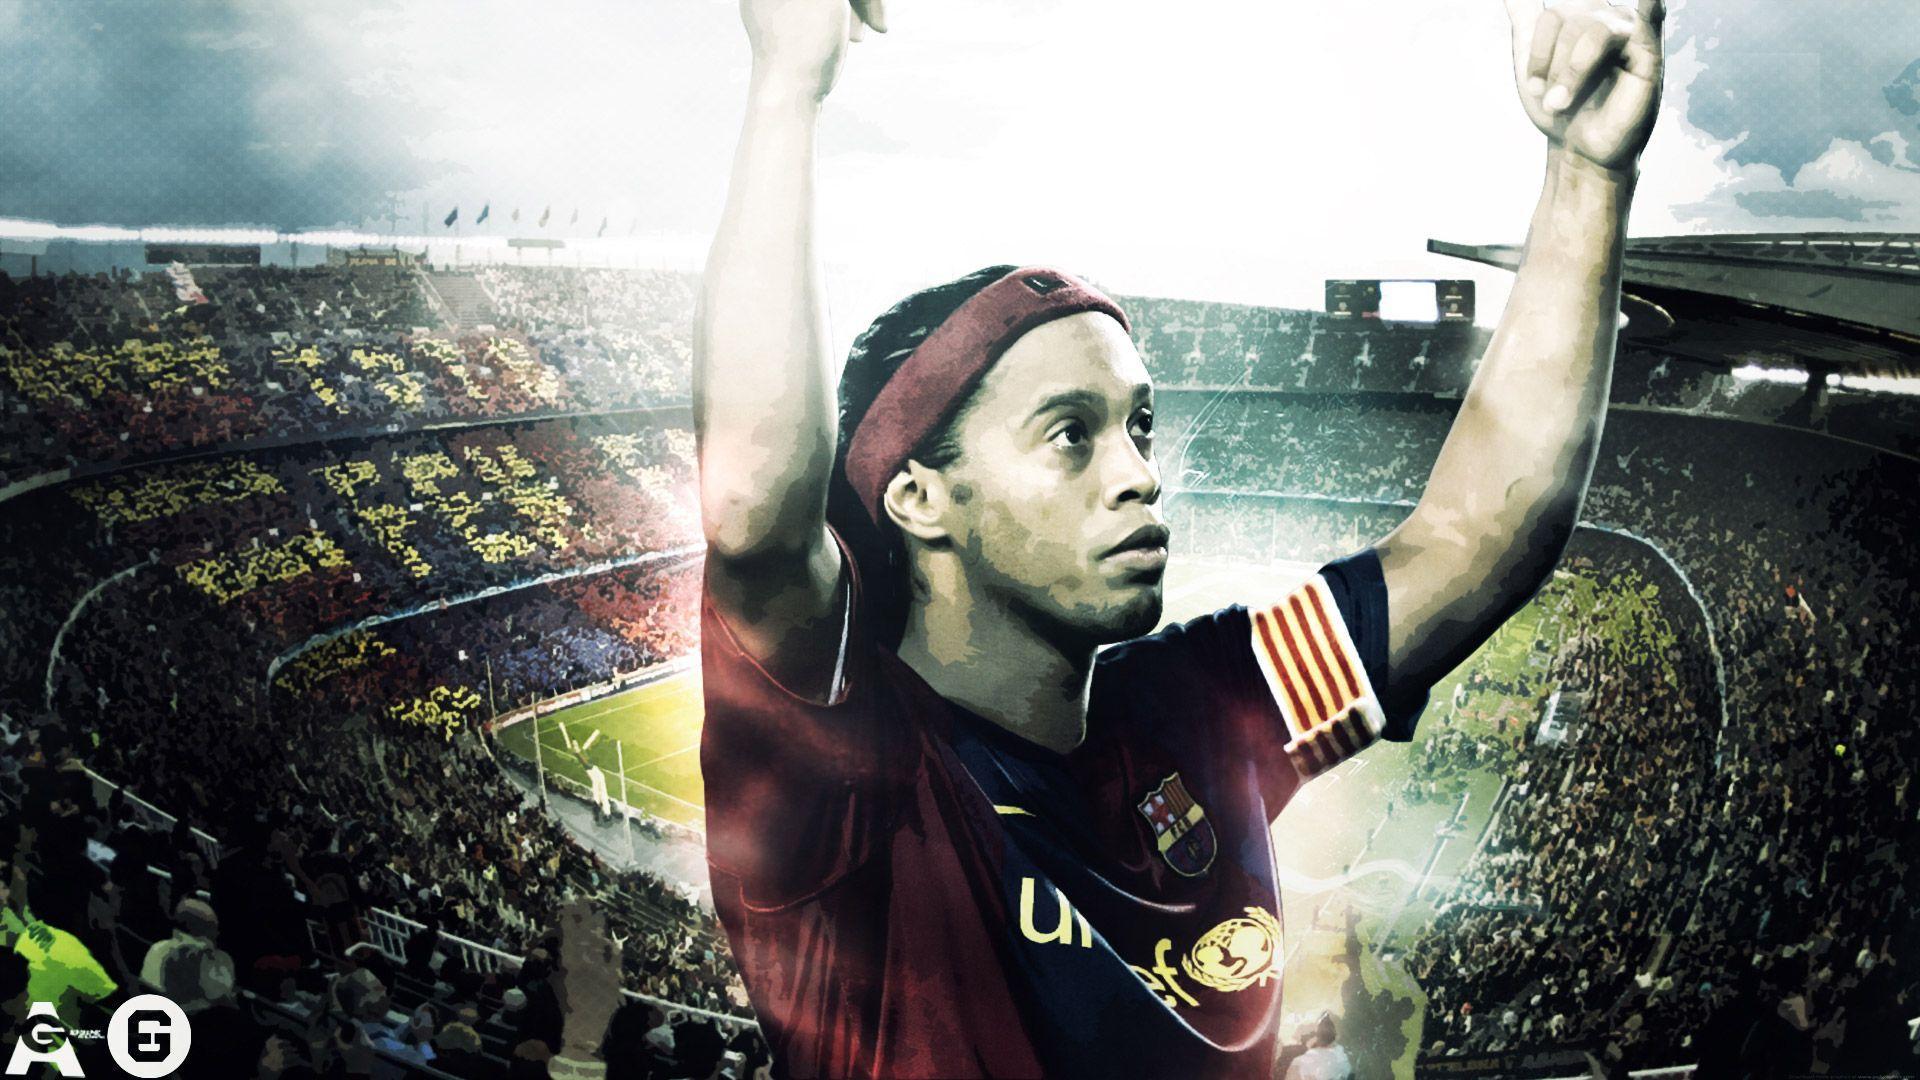 Best image about Ronaldinho HD Picture. Legends